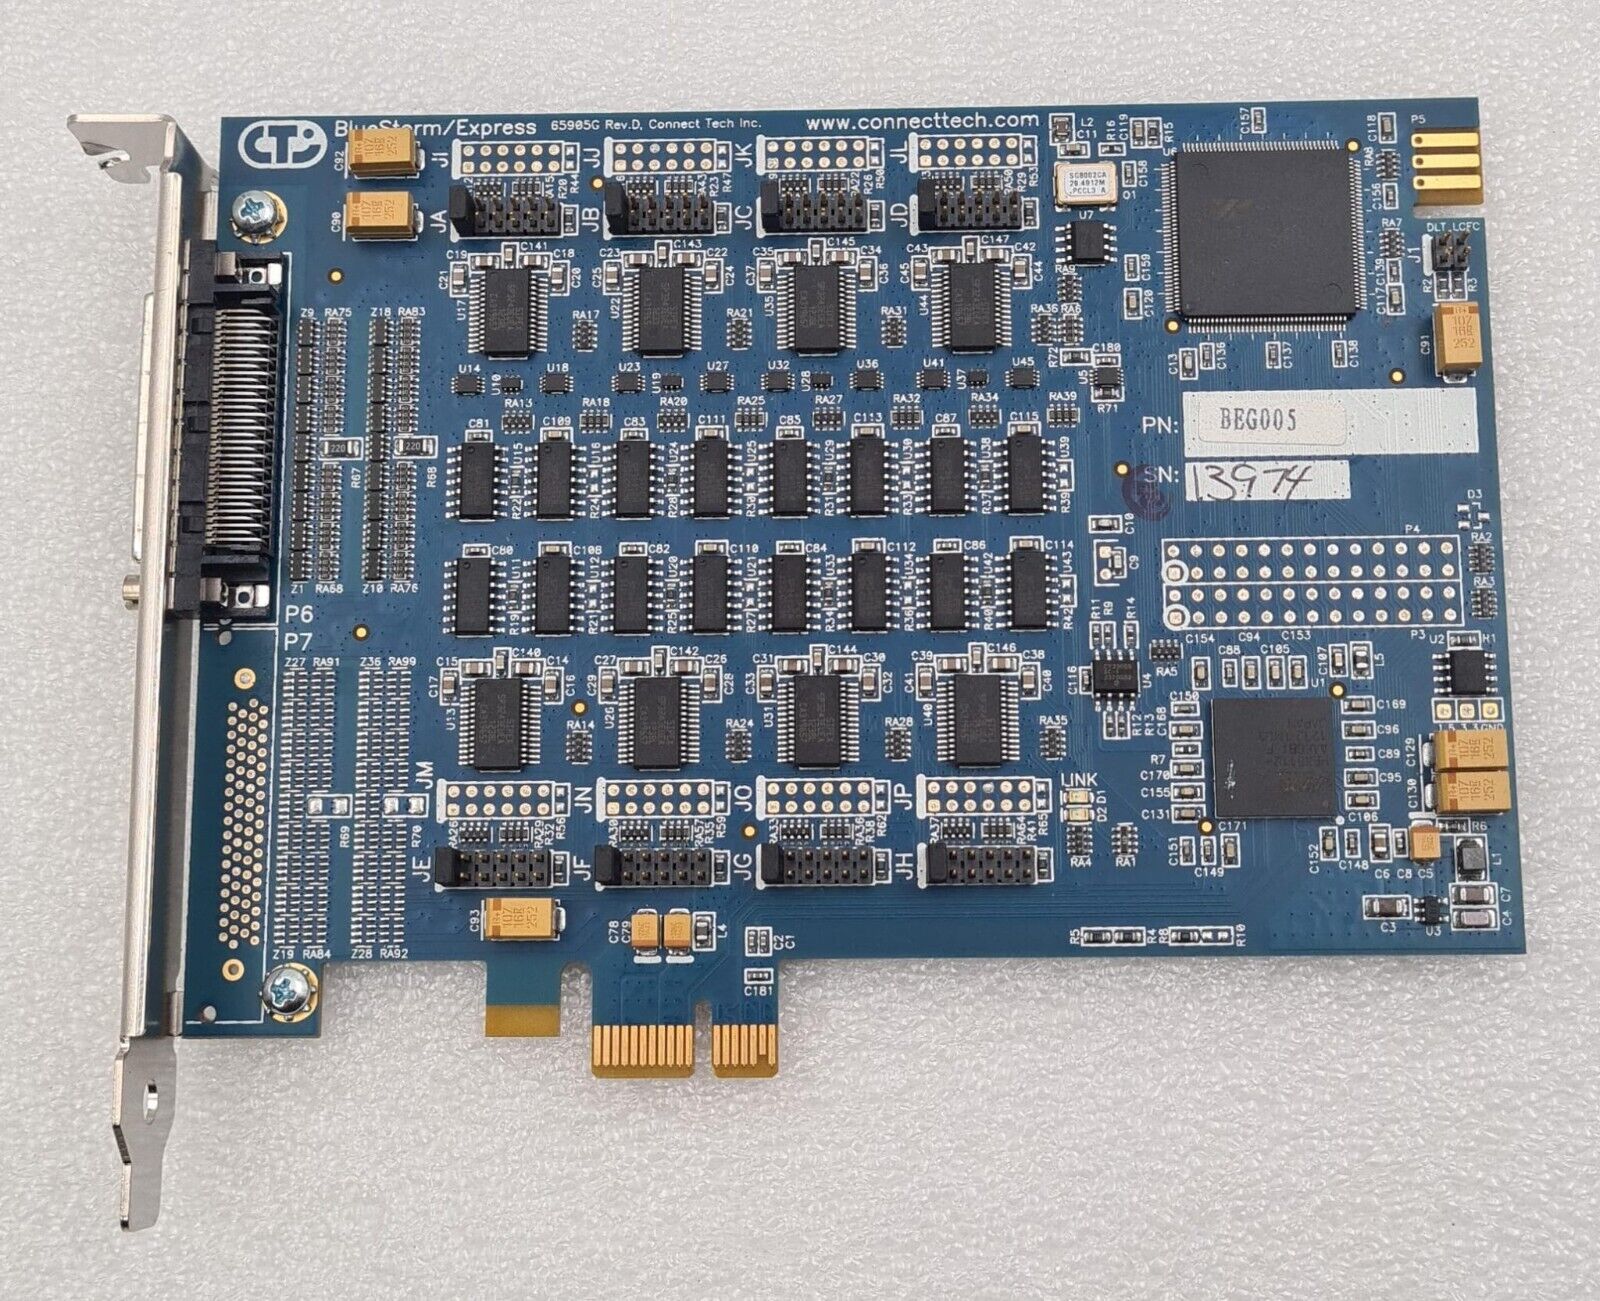 Connect Tech BlueStorm Express 65905G Rev D BEG005 PCI-e Serial Card Ports 1-8